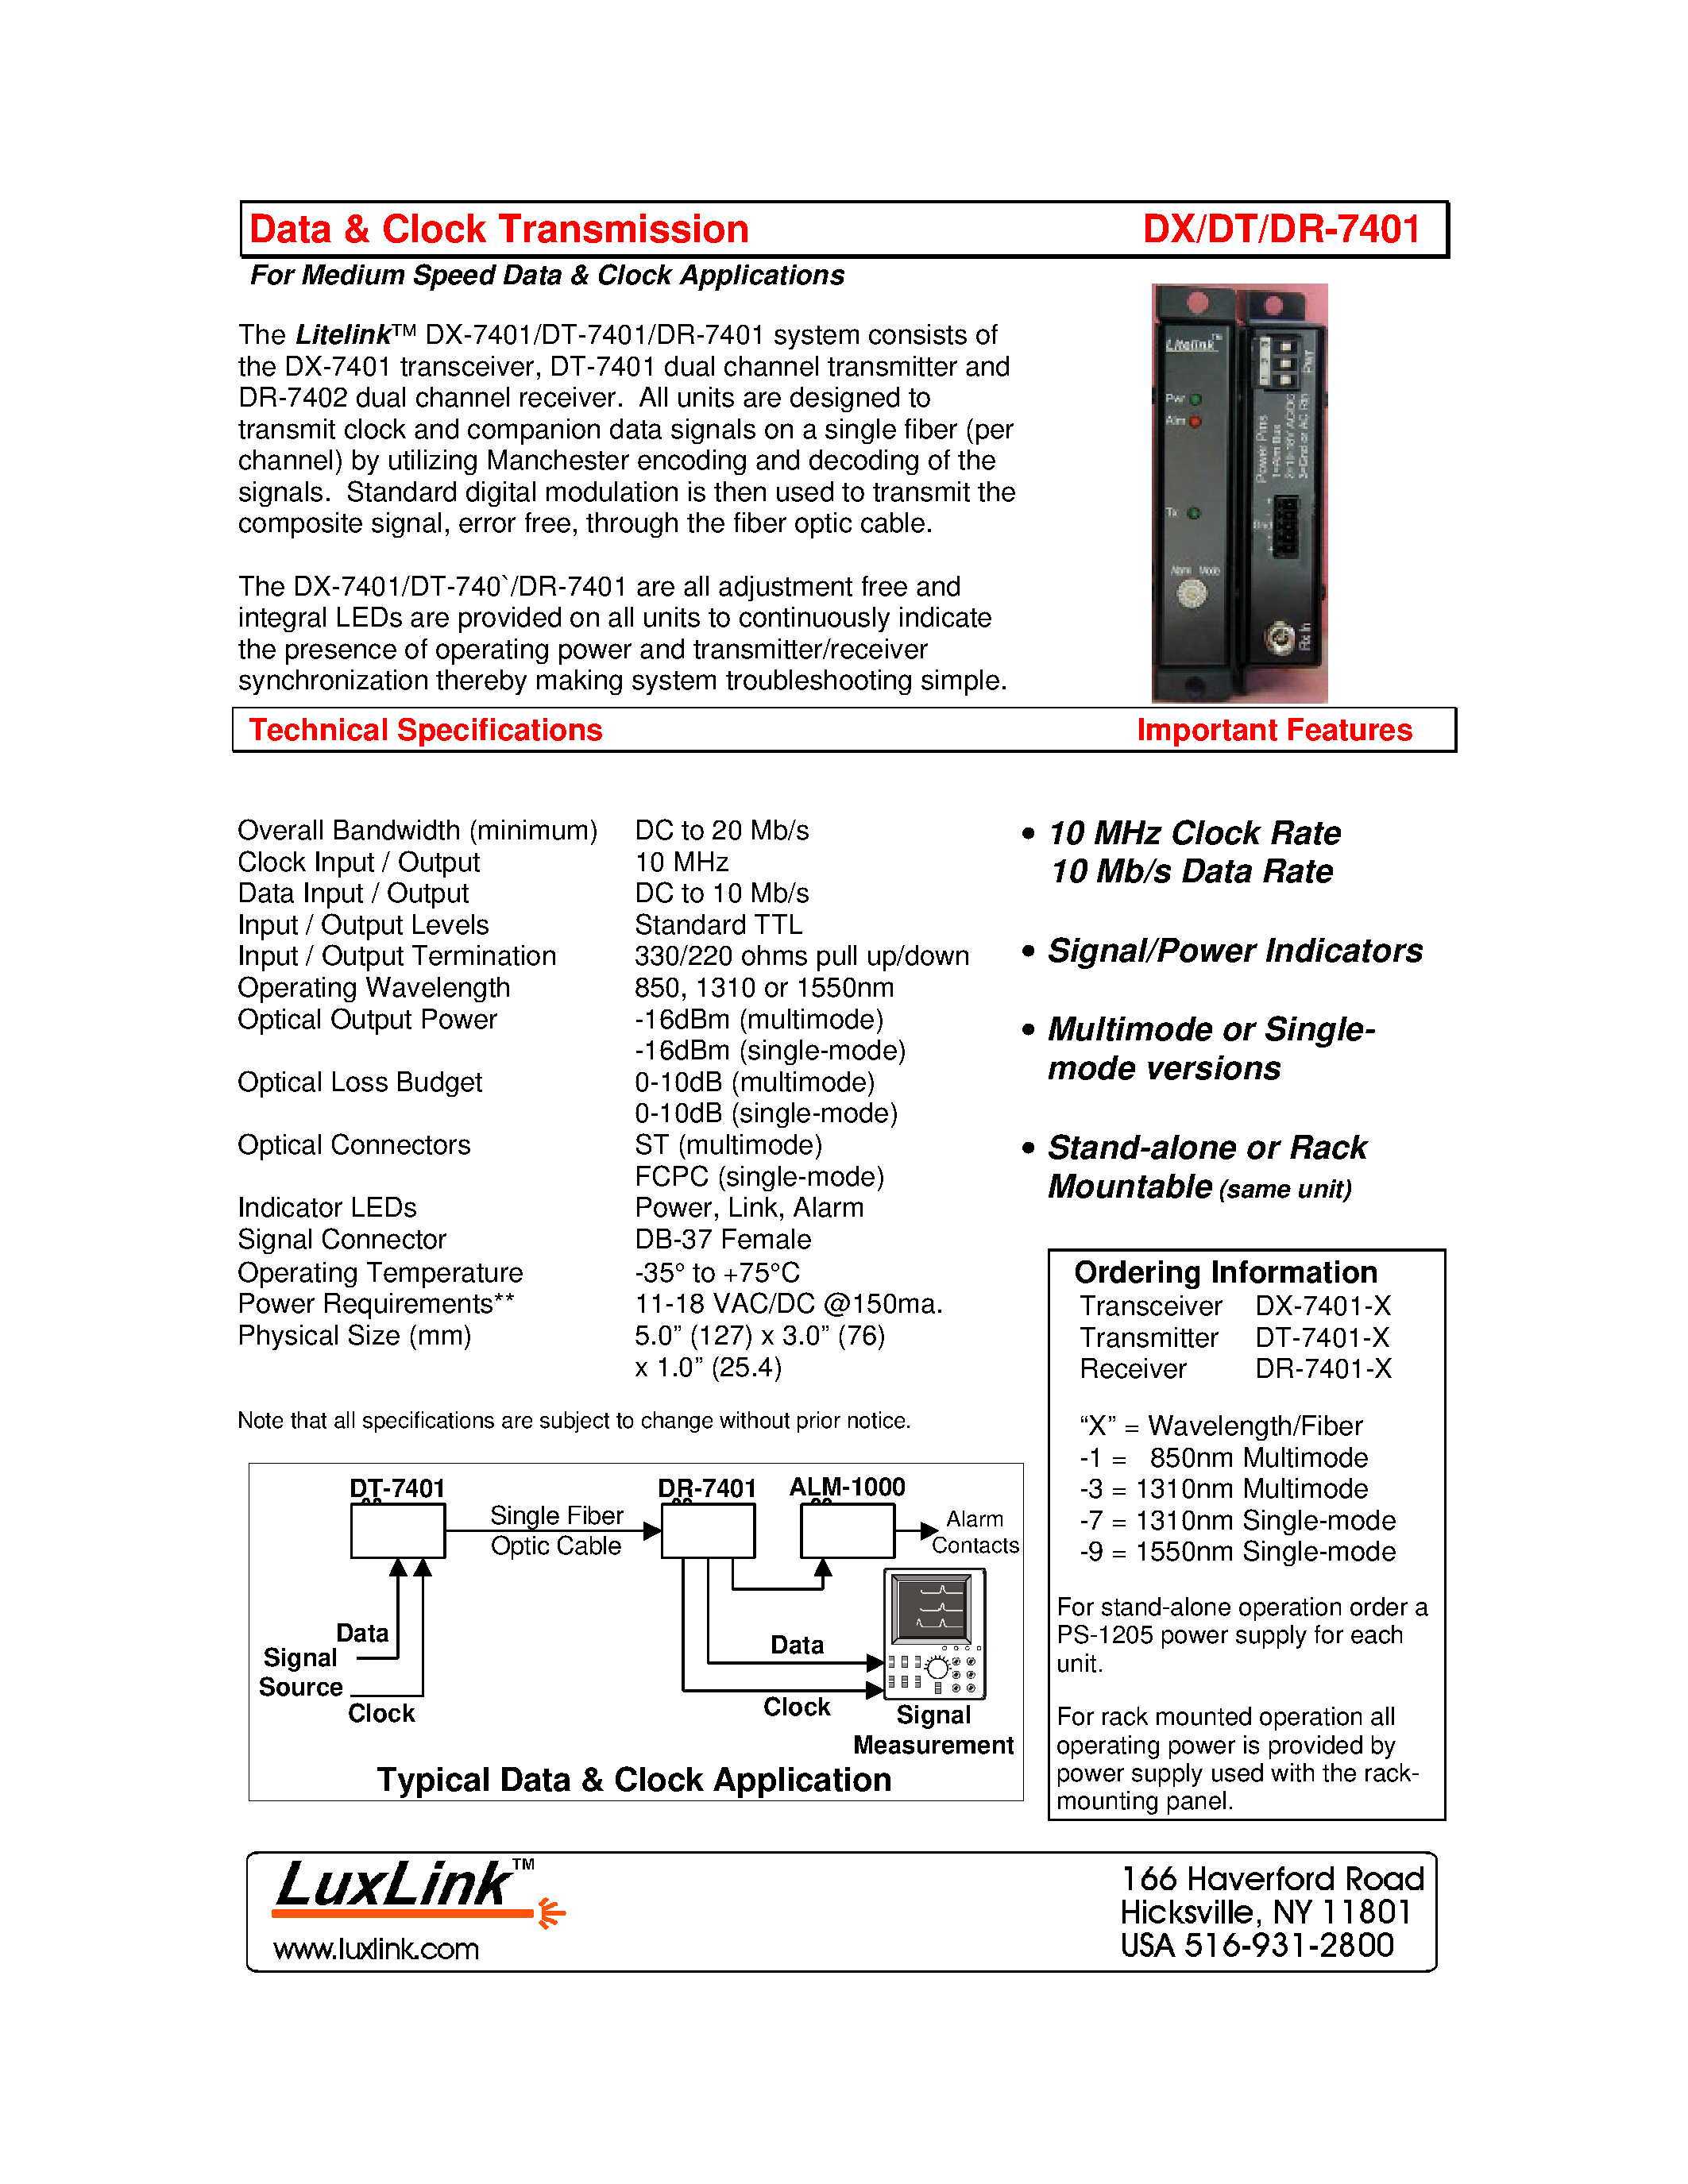 Datasheet DT-7401-X - DATA & CLOCK TRANSMISSION page 1